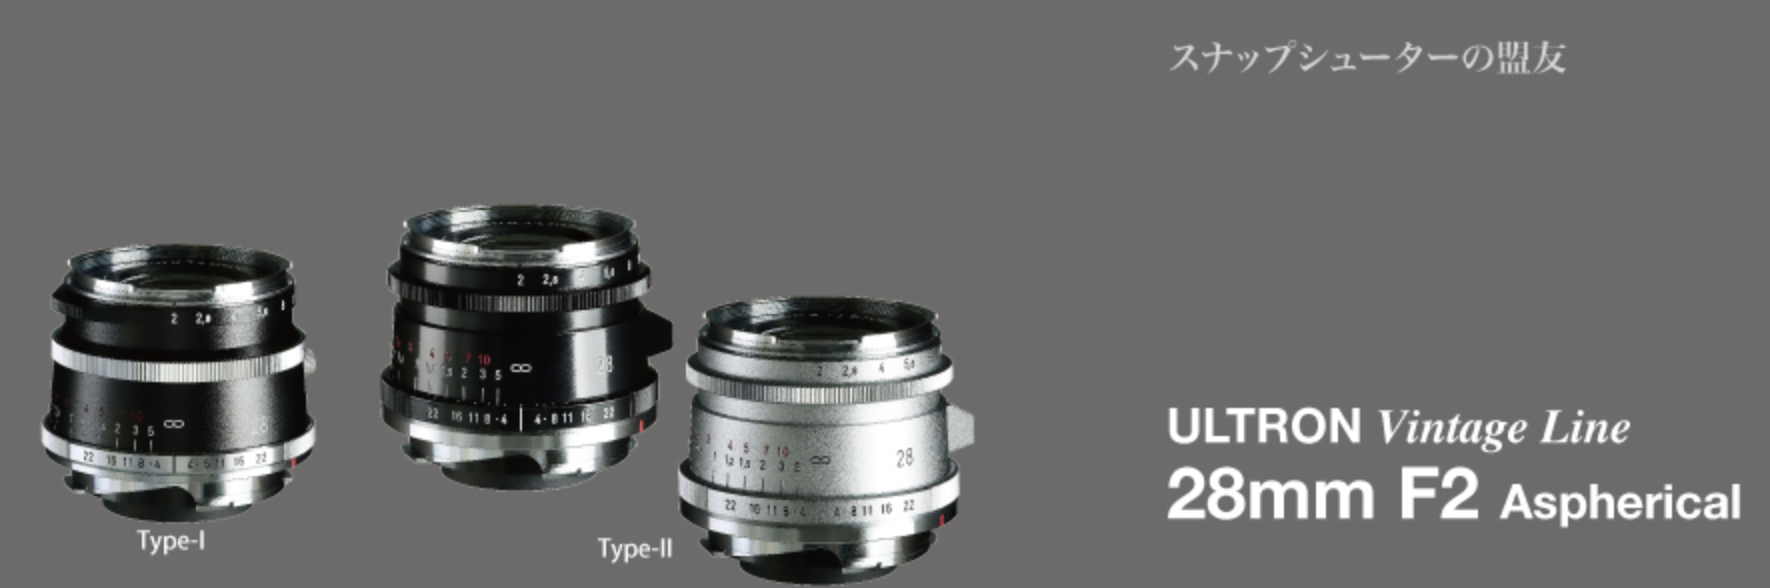 ULTRON 28mm F2 VM - レンズ(単焦点)